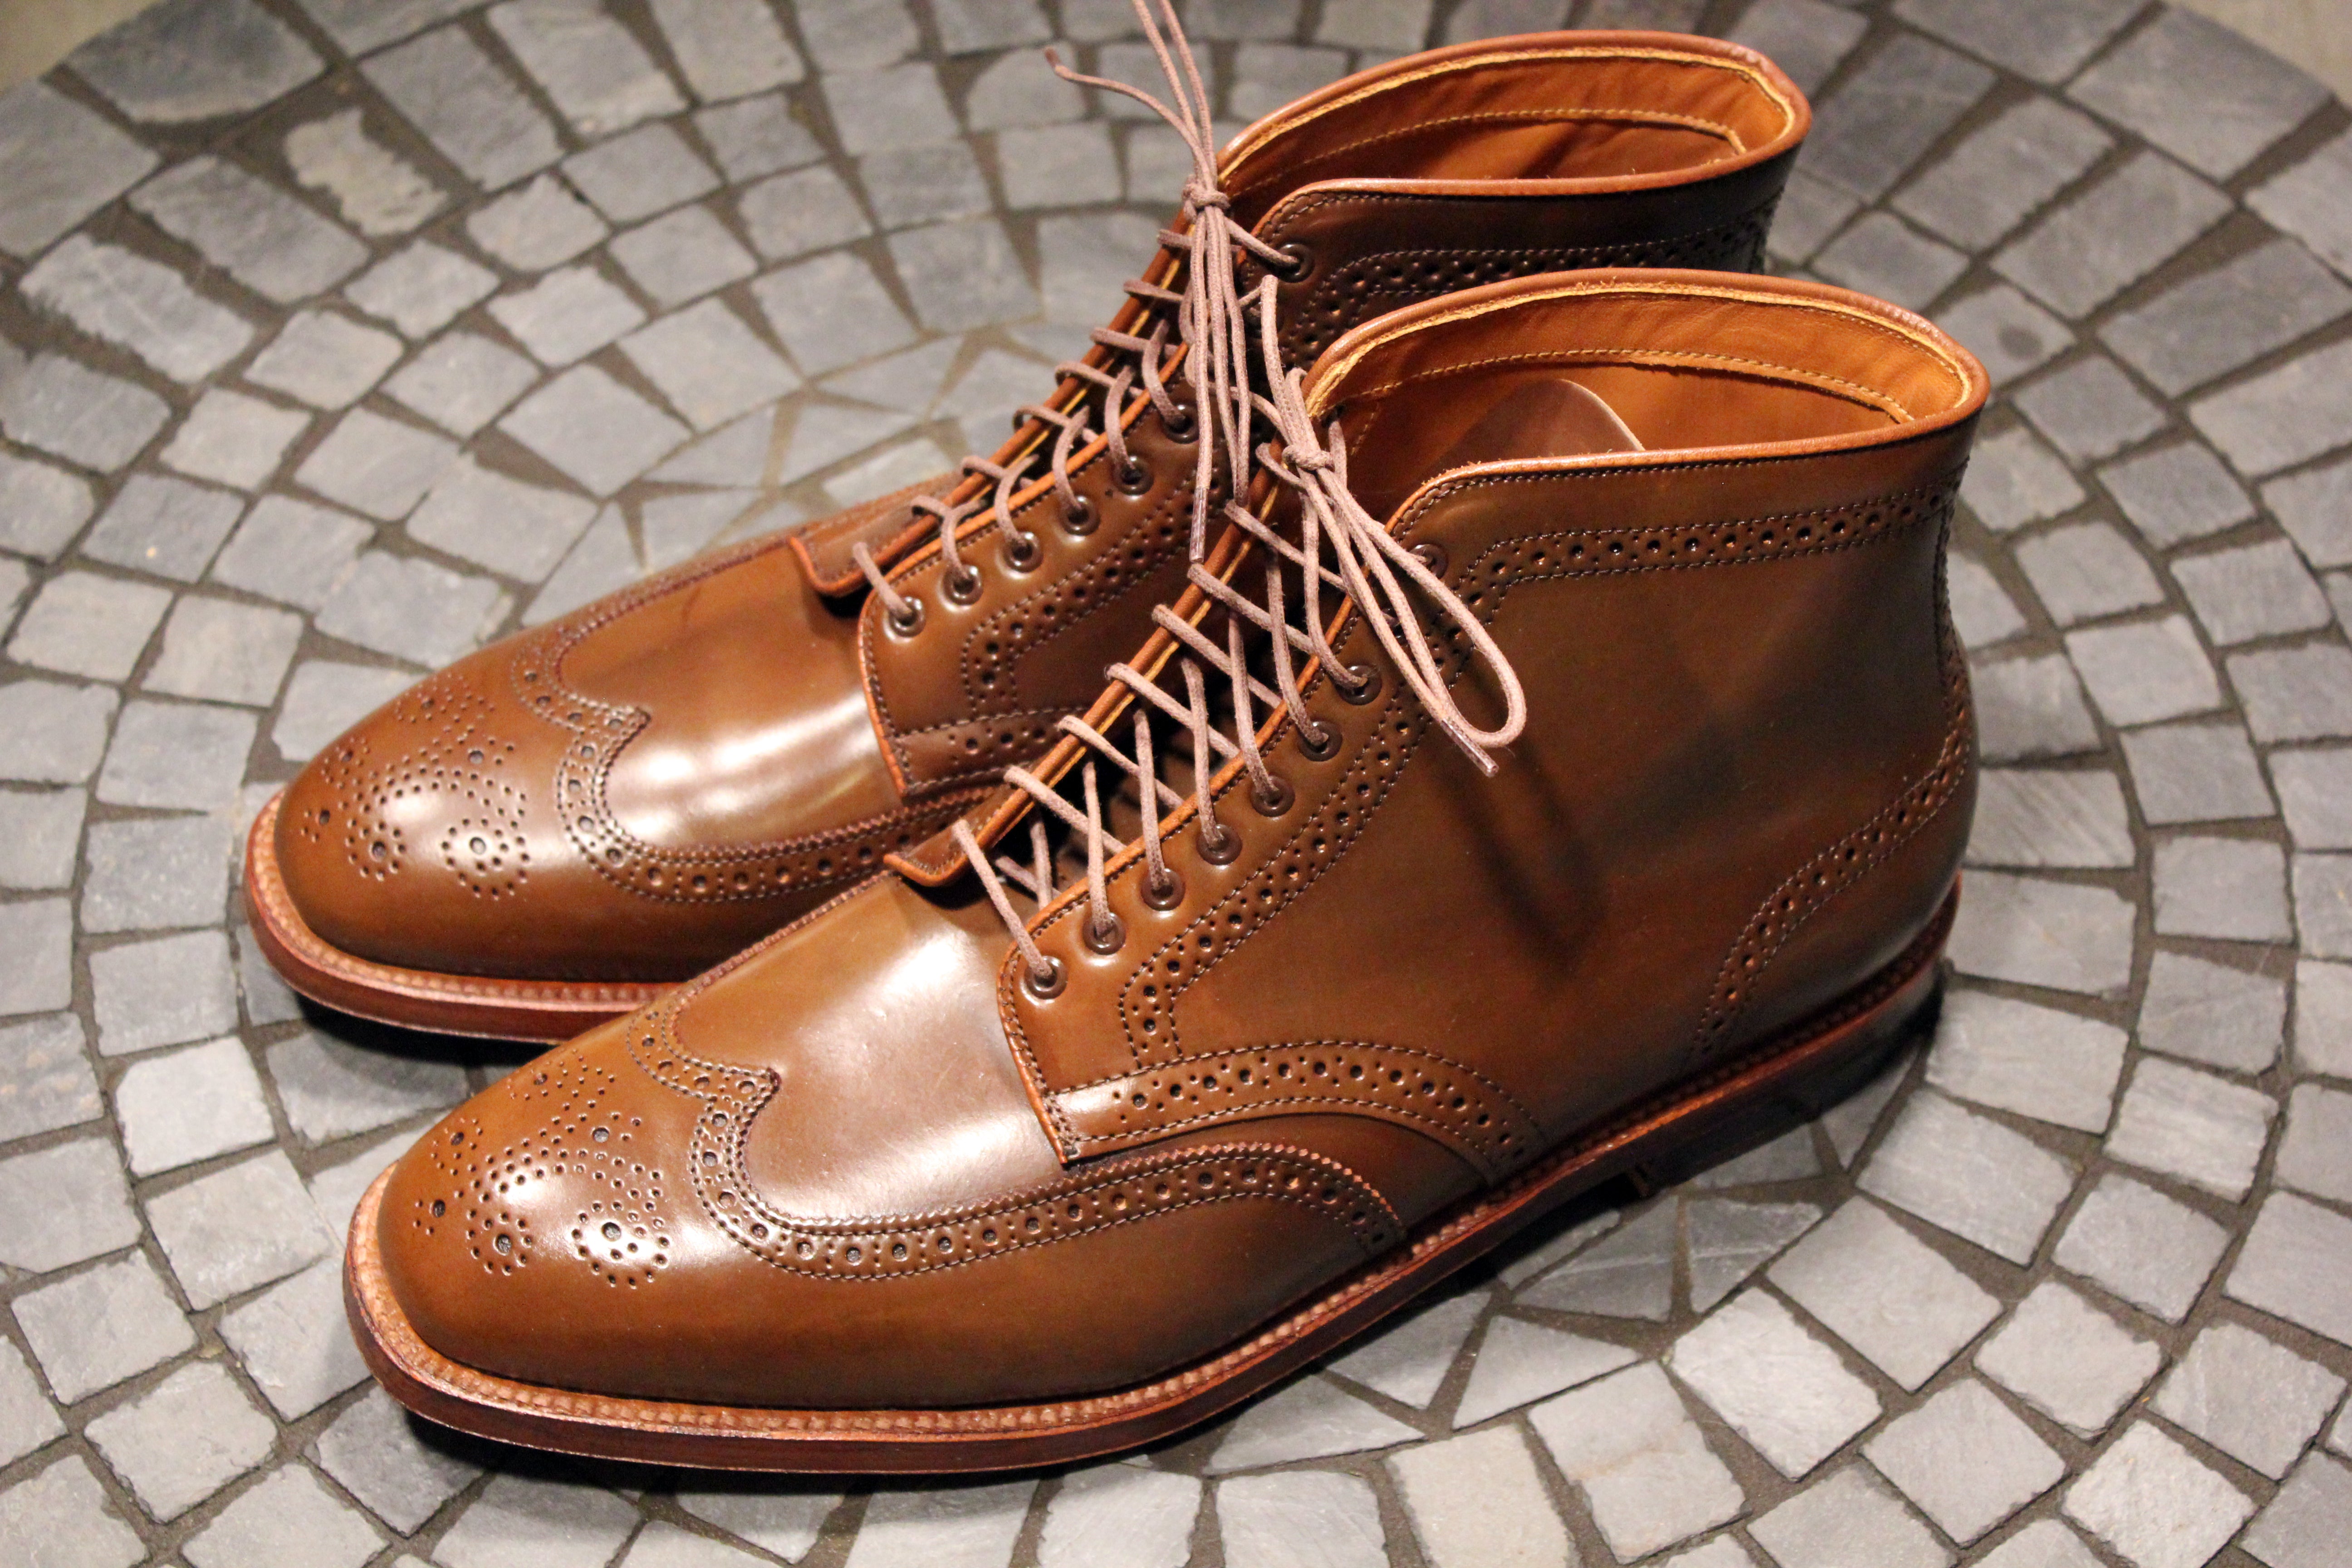 thin leather shoelaces